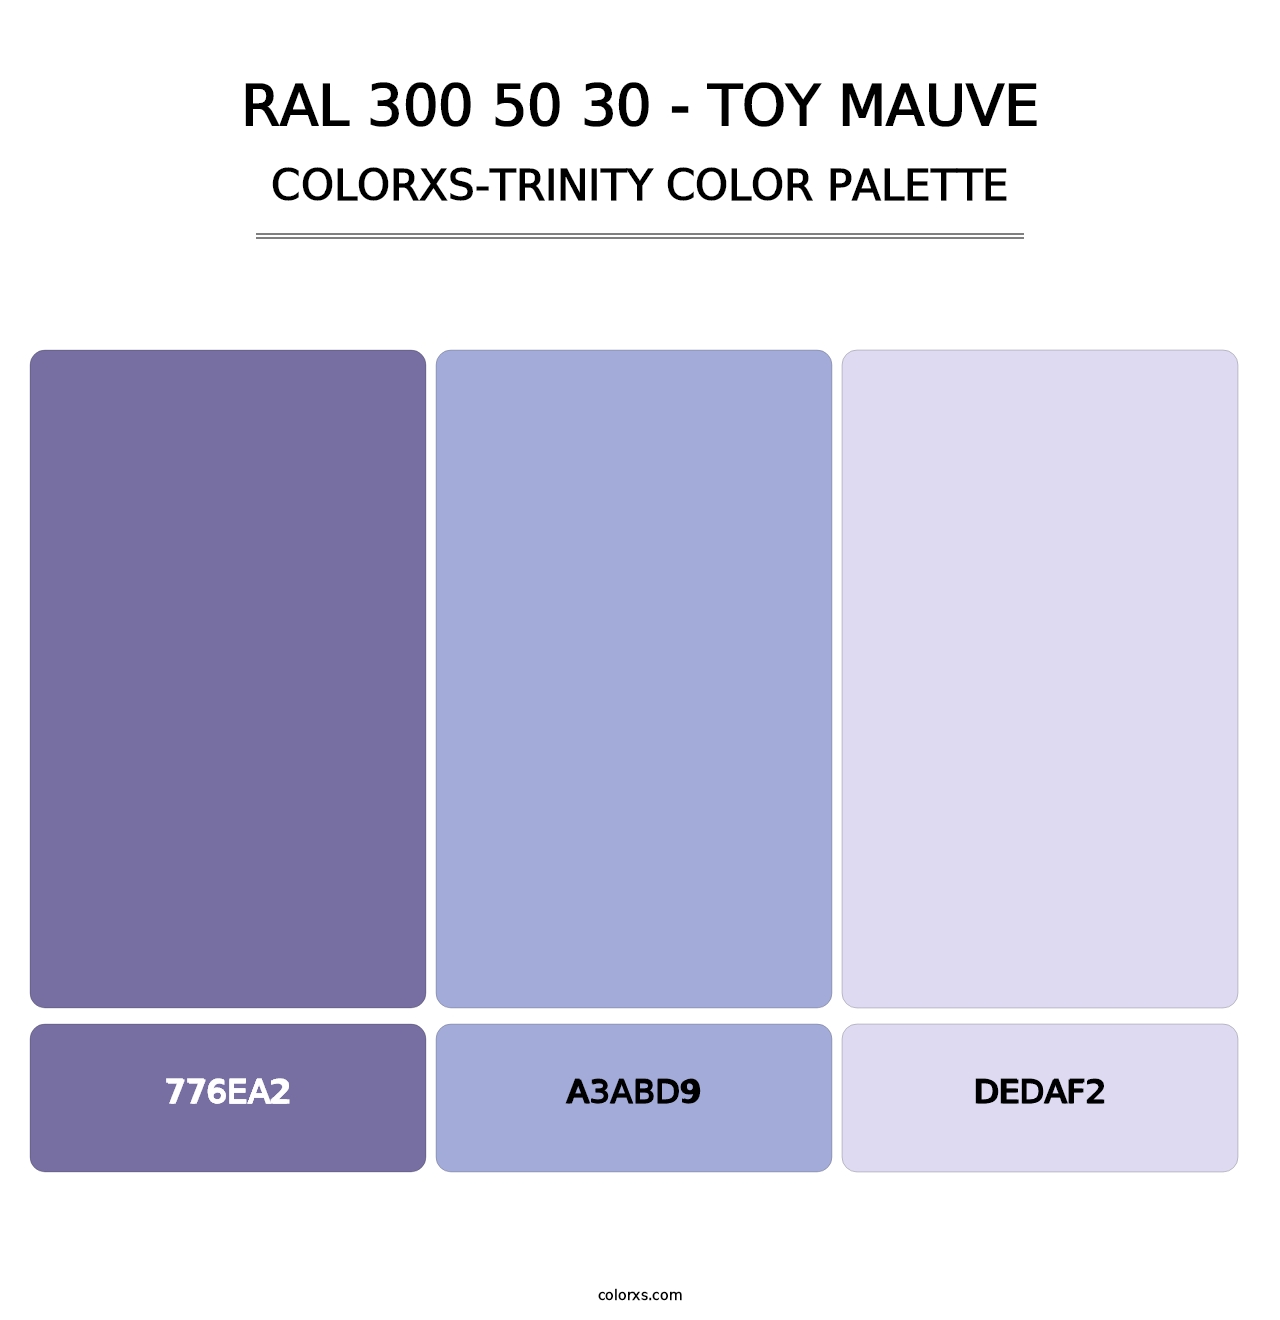 RAL 300 50 30 - Toy Mauve - Colorxs Trinity Palette